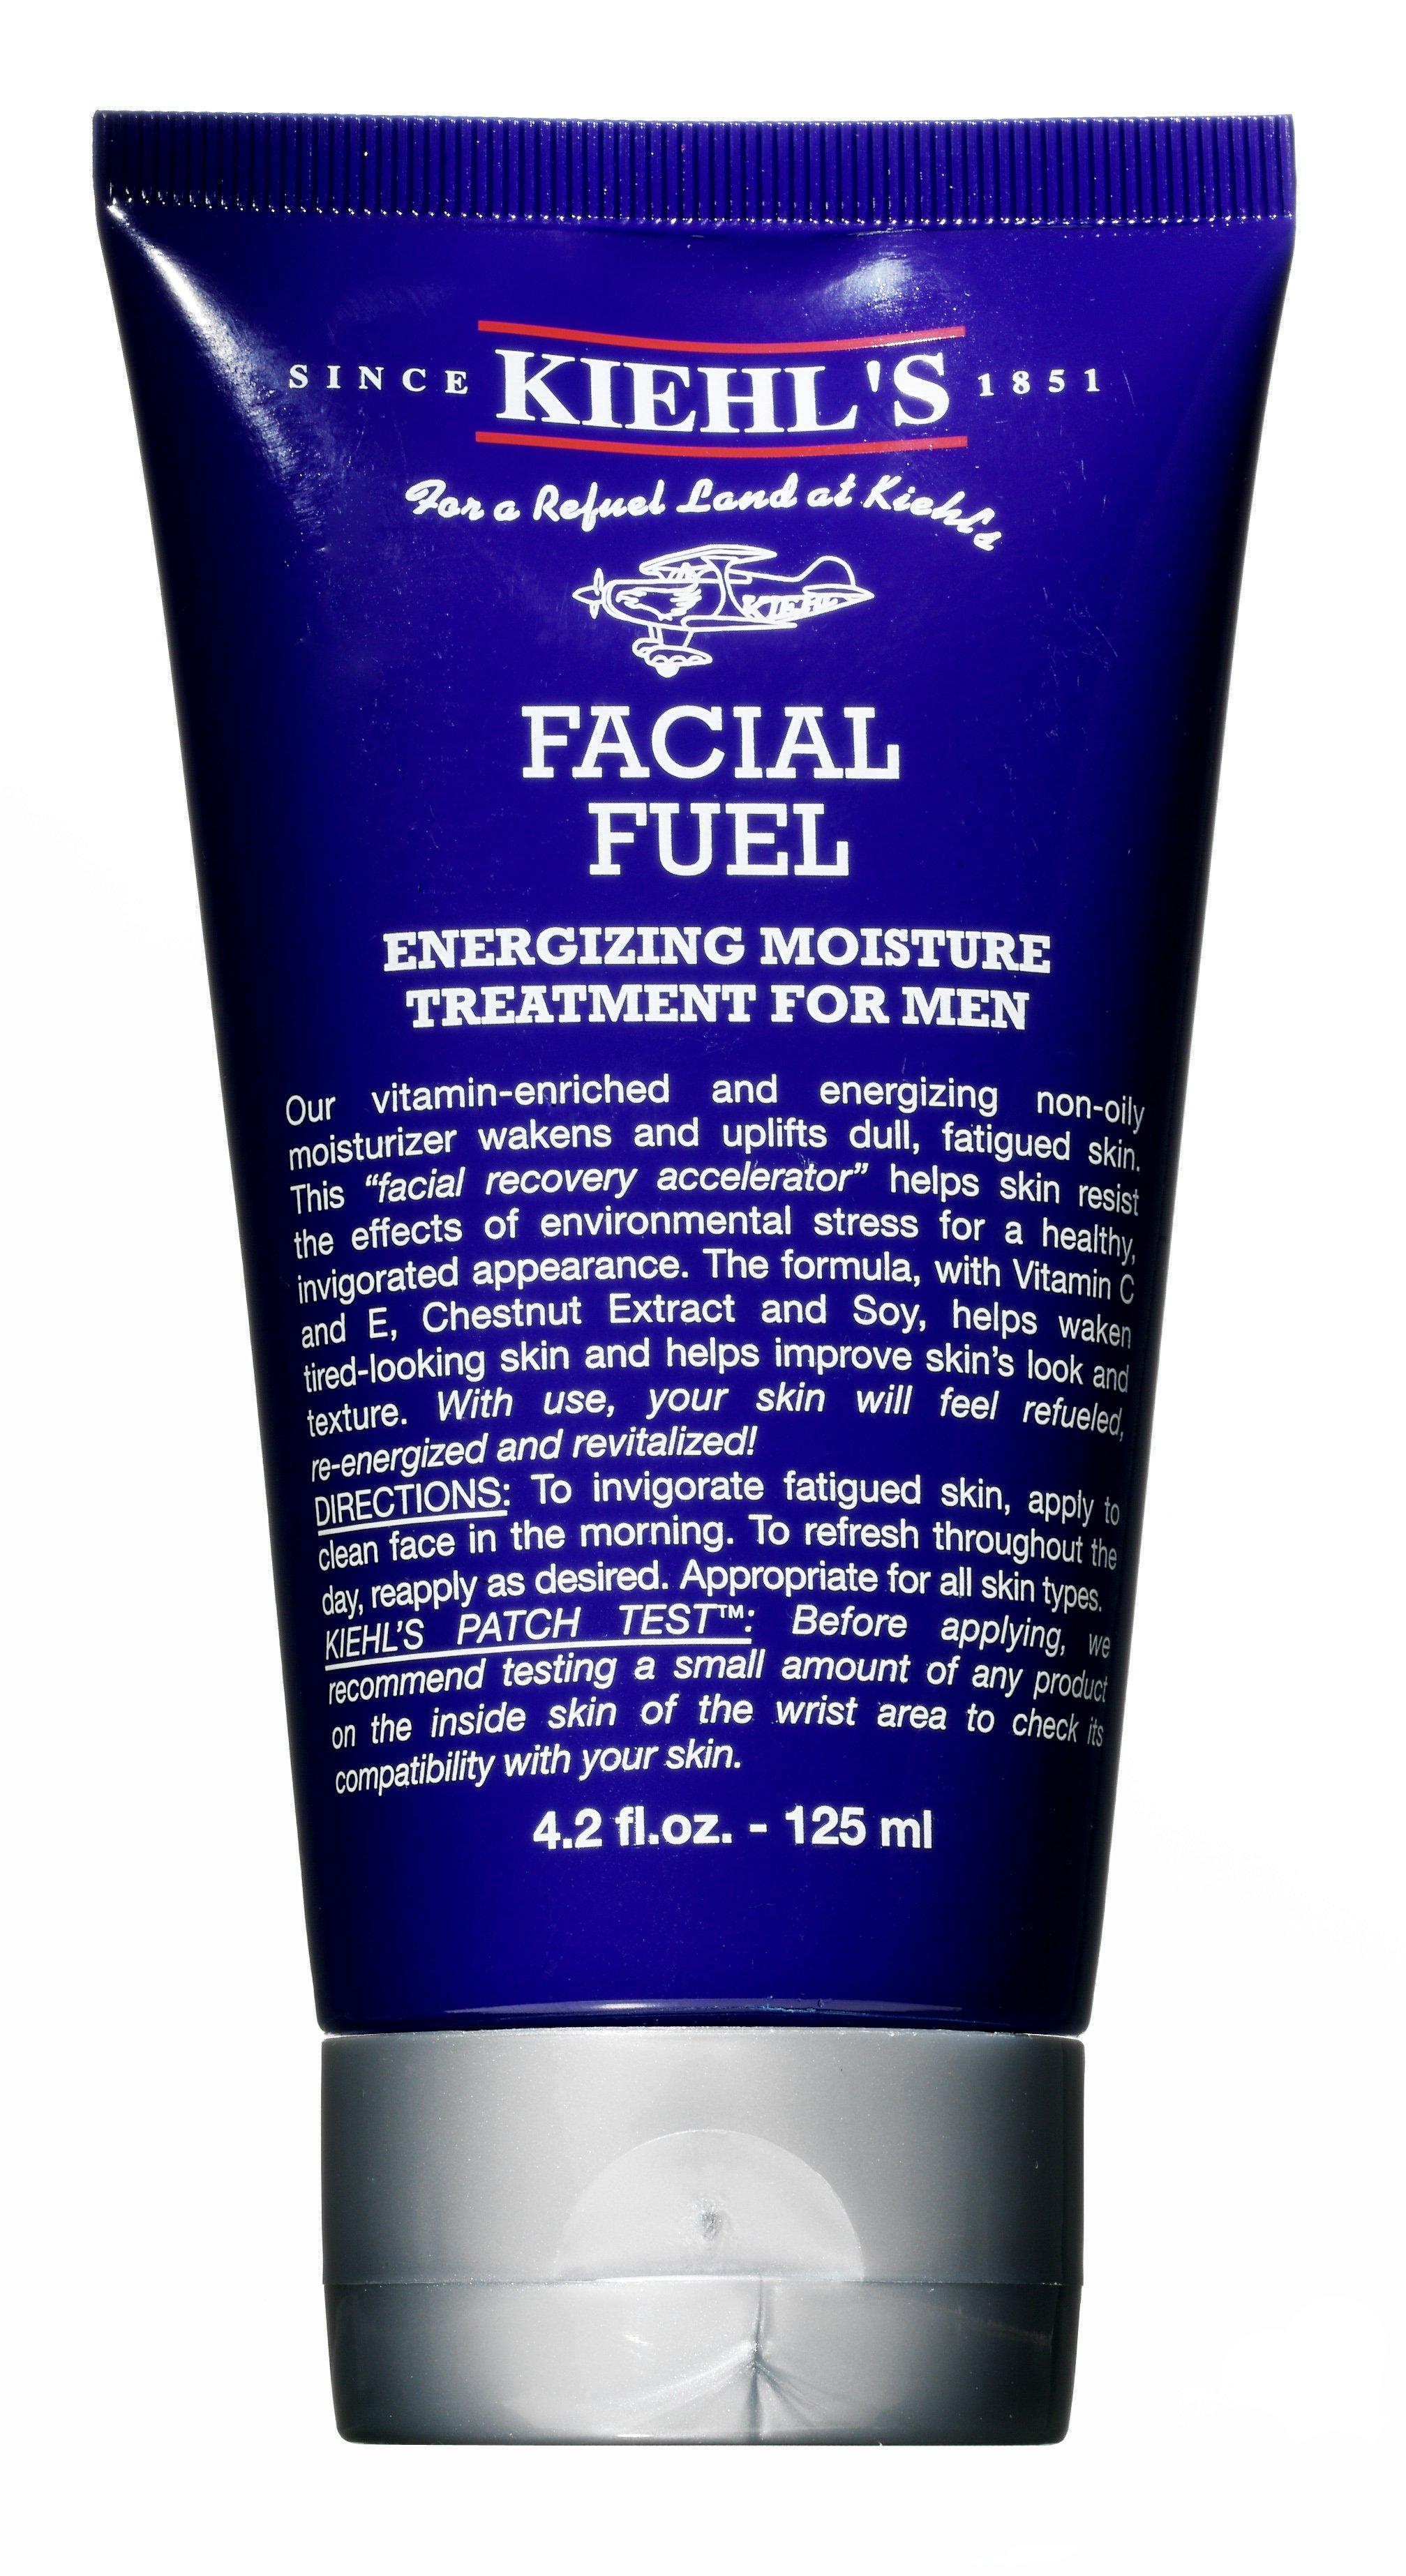 Kiehl's Facial Facial Fuel Energizing Moisture Treatment for Men 